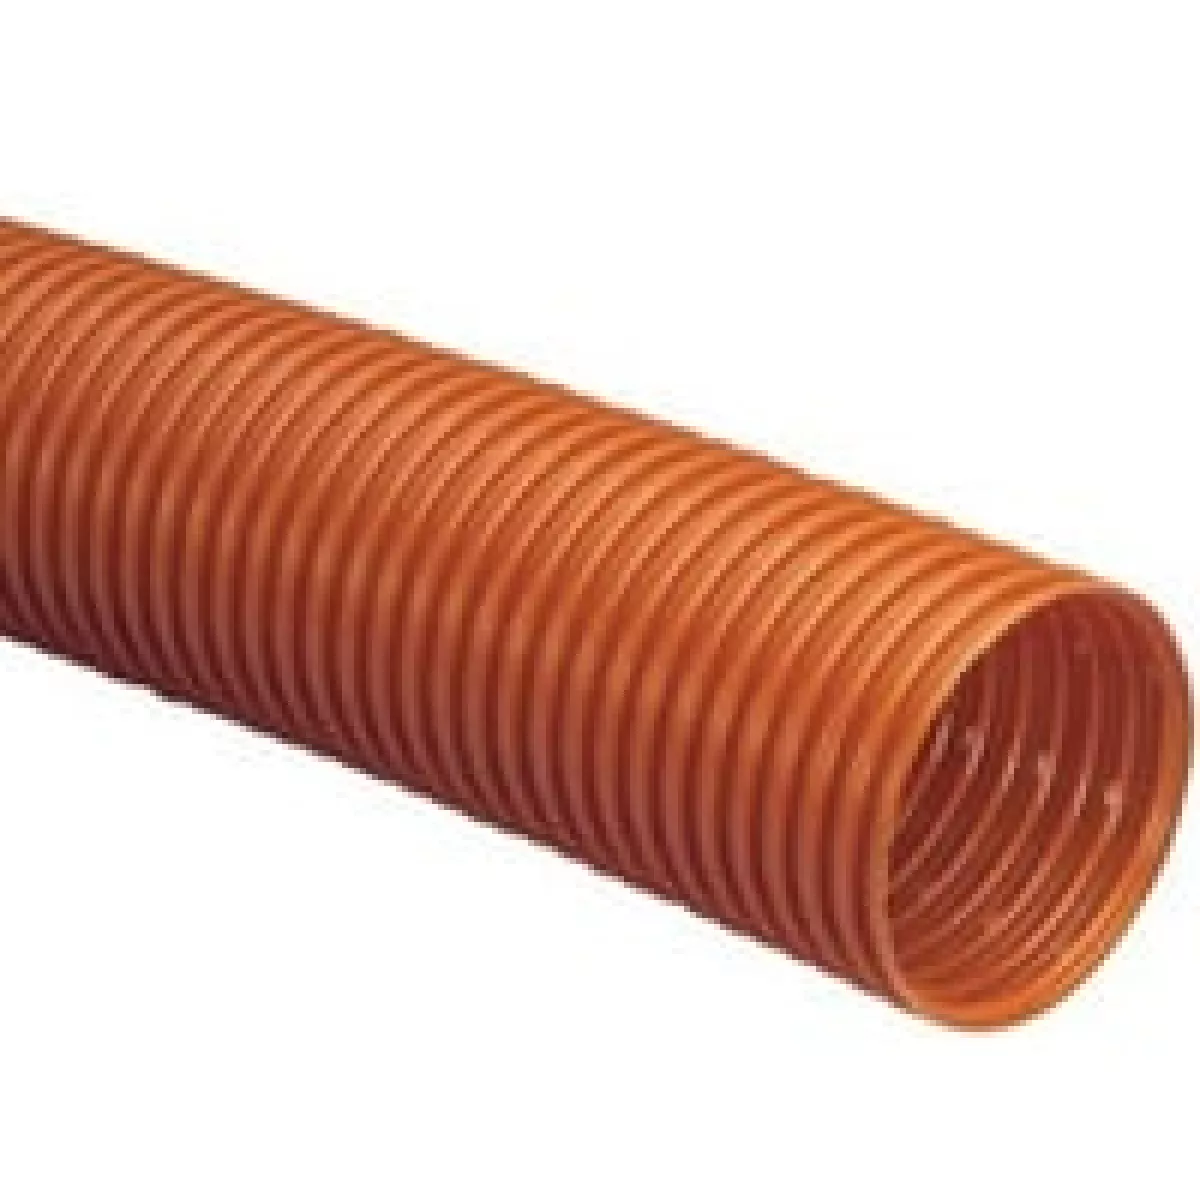 #2 - Dr?nr?r PVC m. standard slids, 50 mm - 50 meter